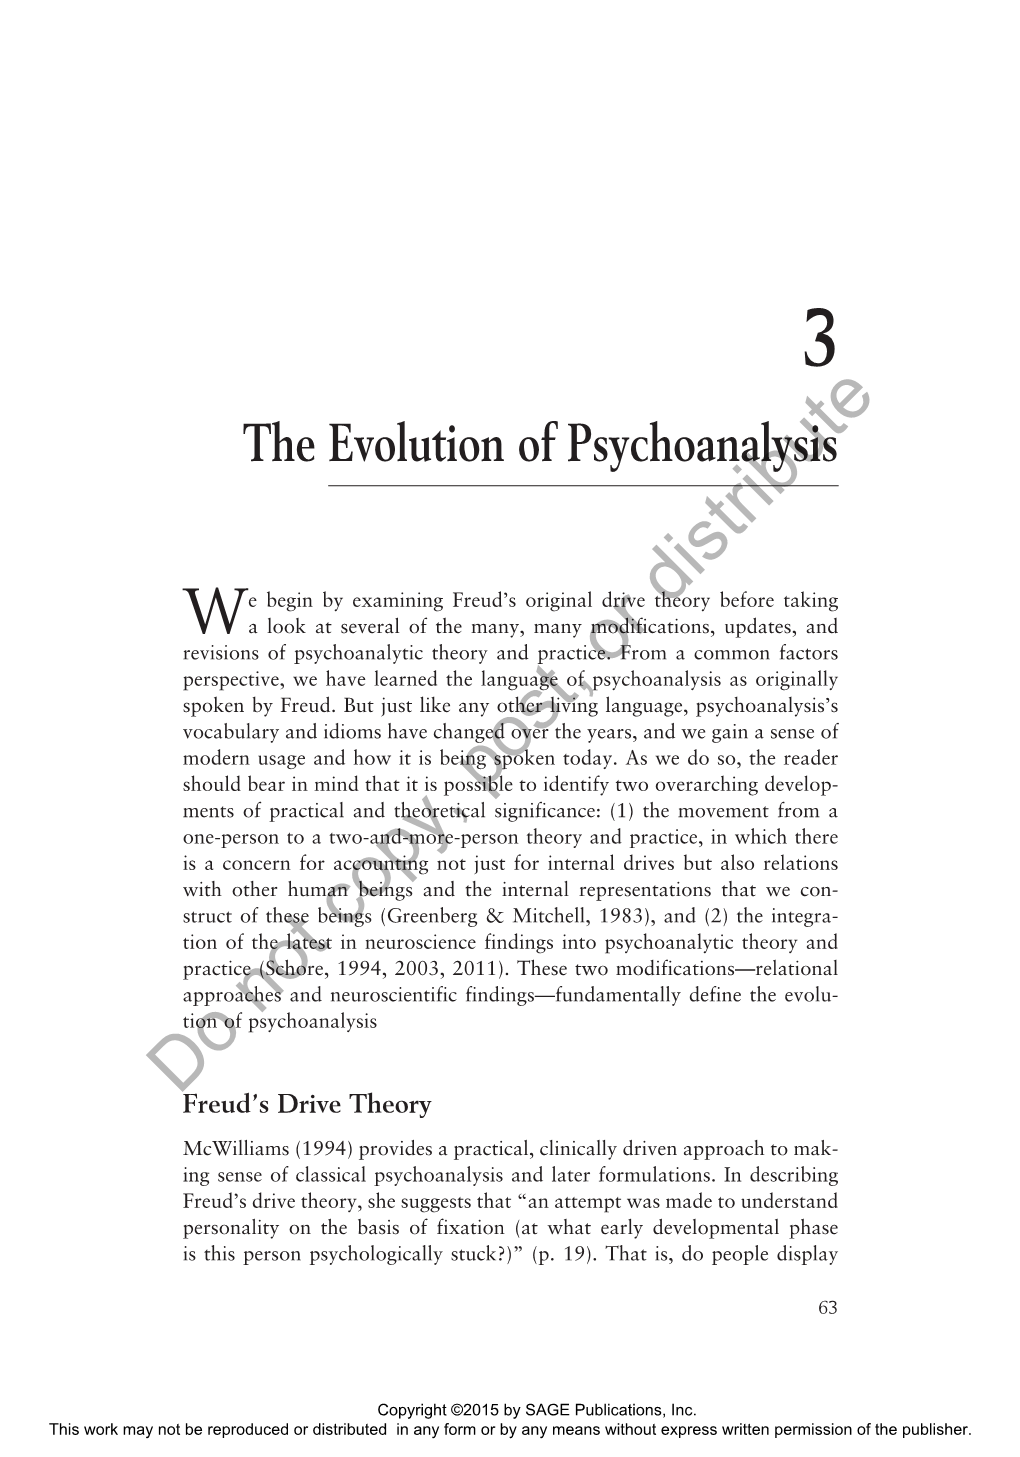 The Evolution of Psychoanalysis